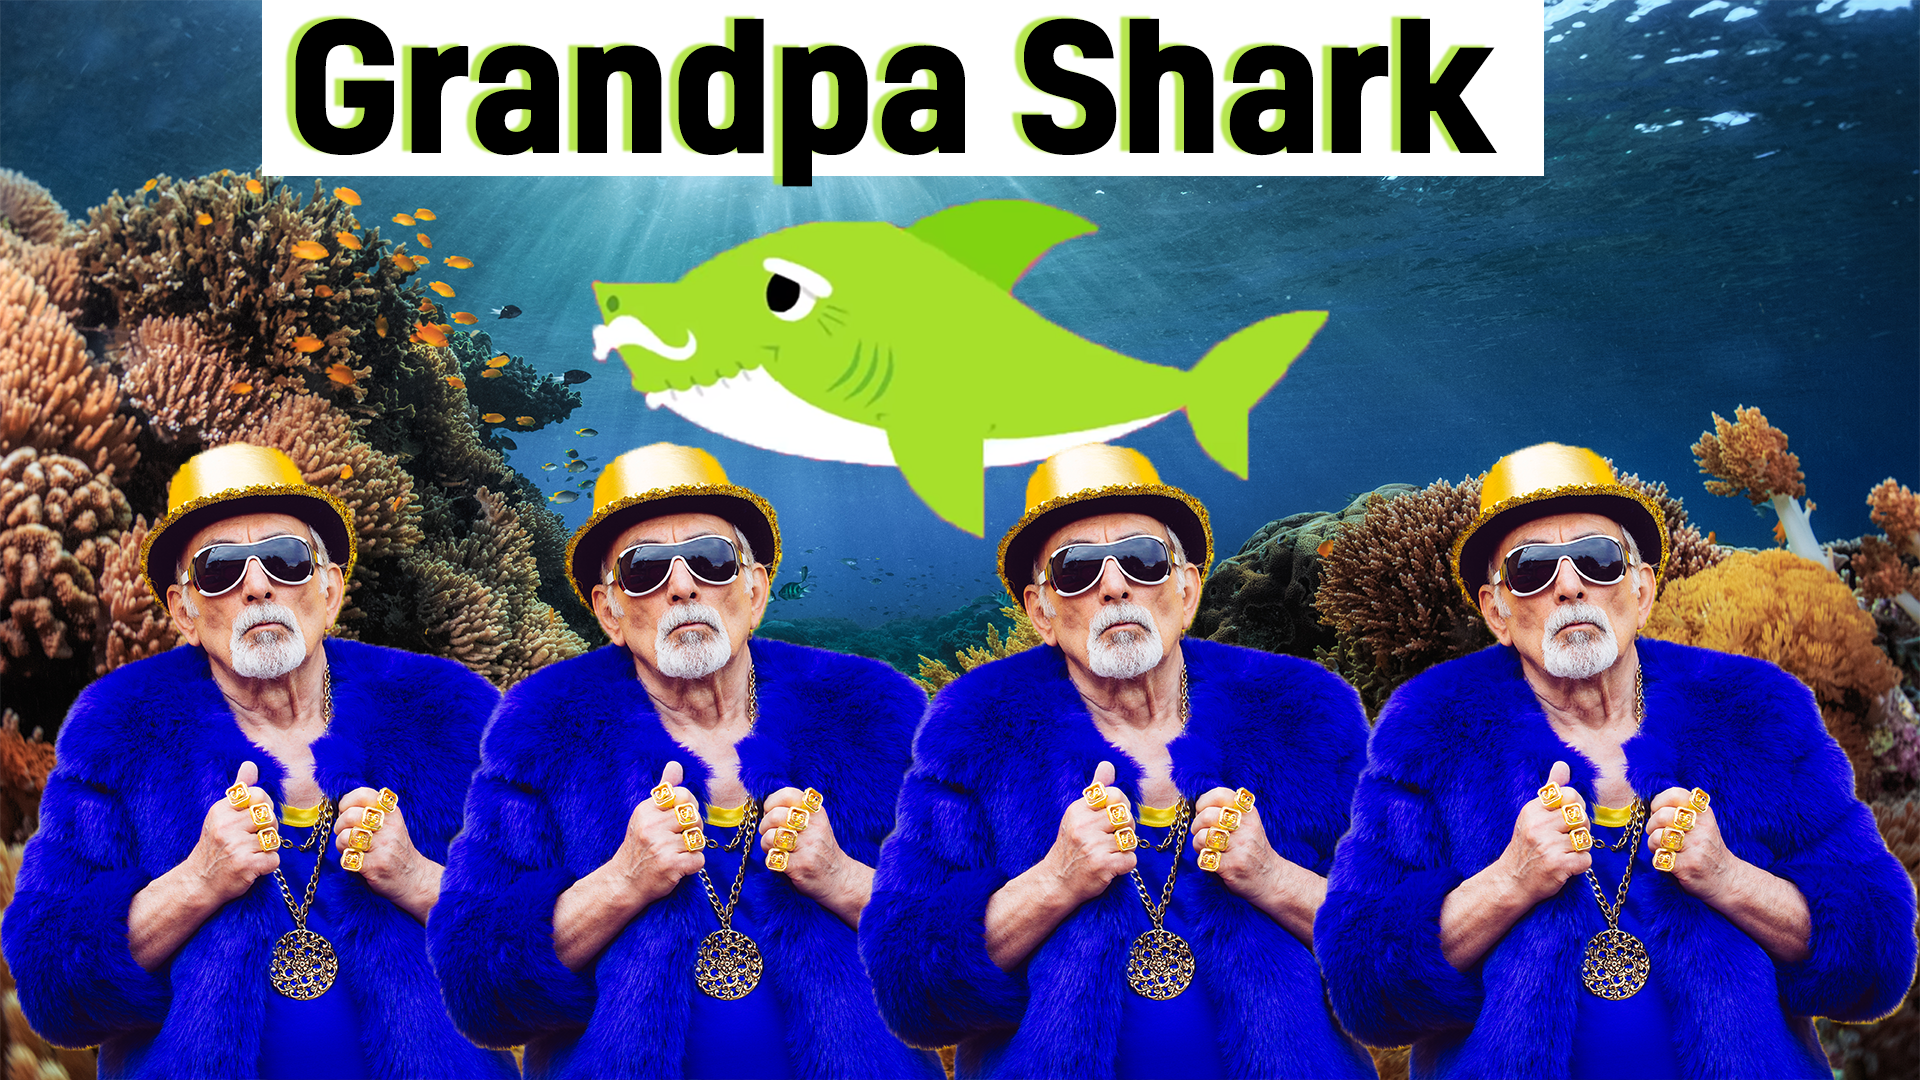 Grandpa Shark and fish